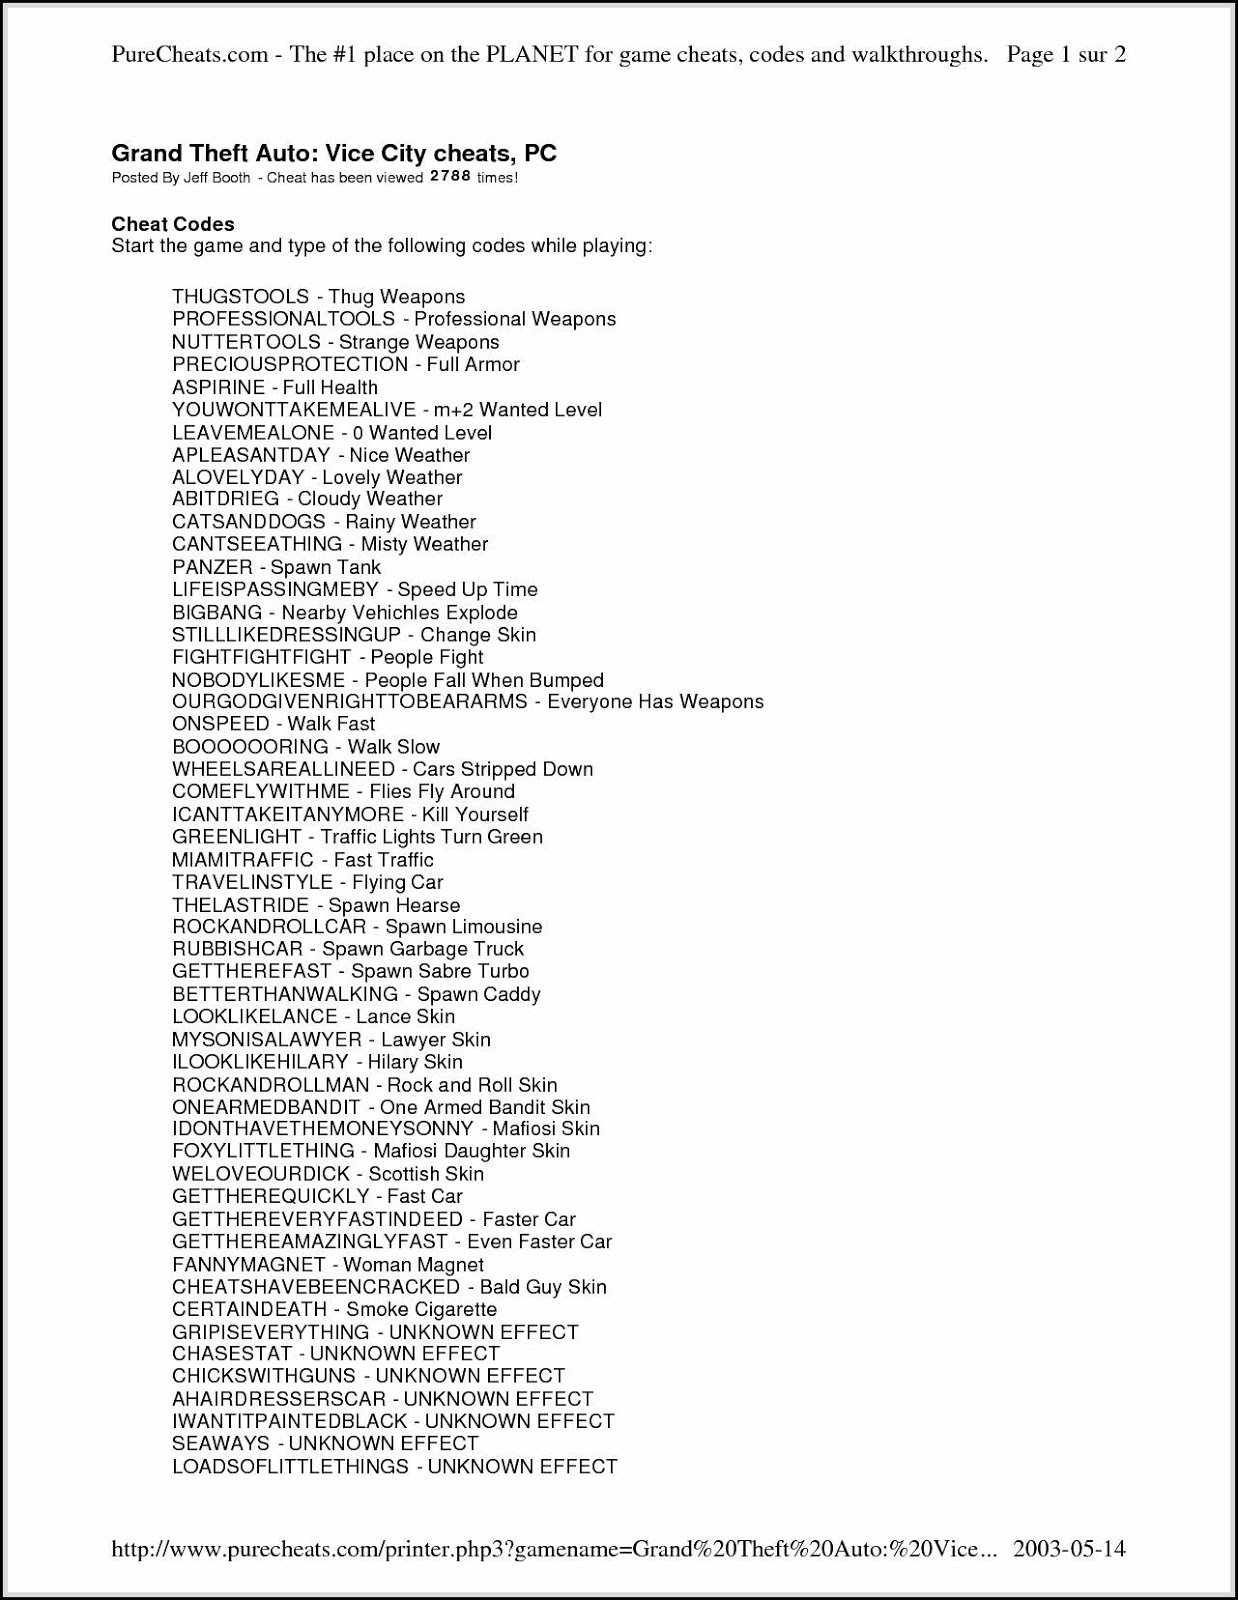 niebel's methods standards and work design 13th pdf 118lkjh